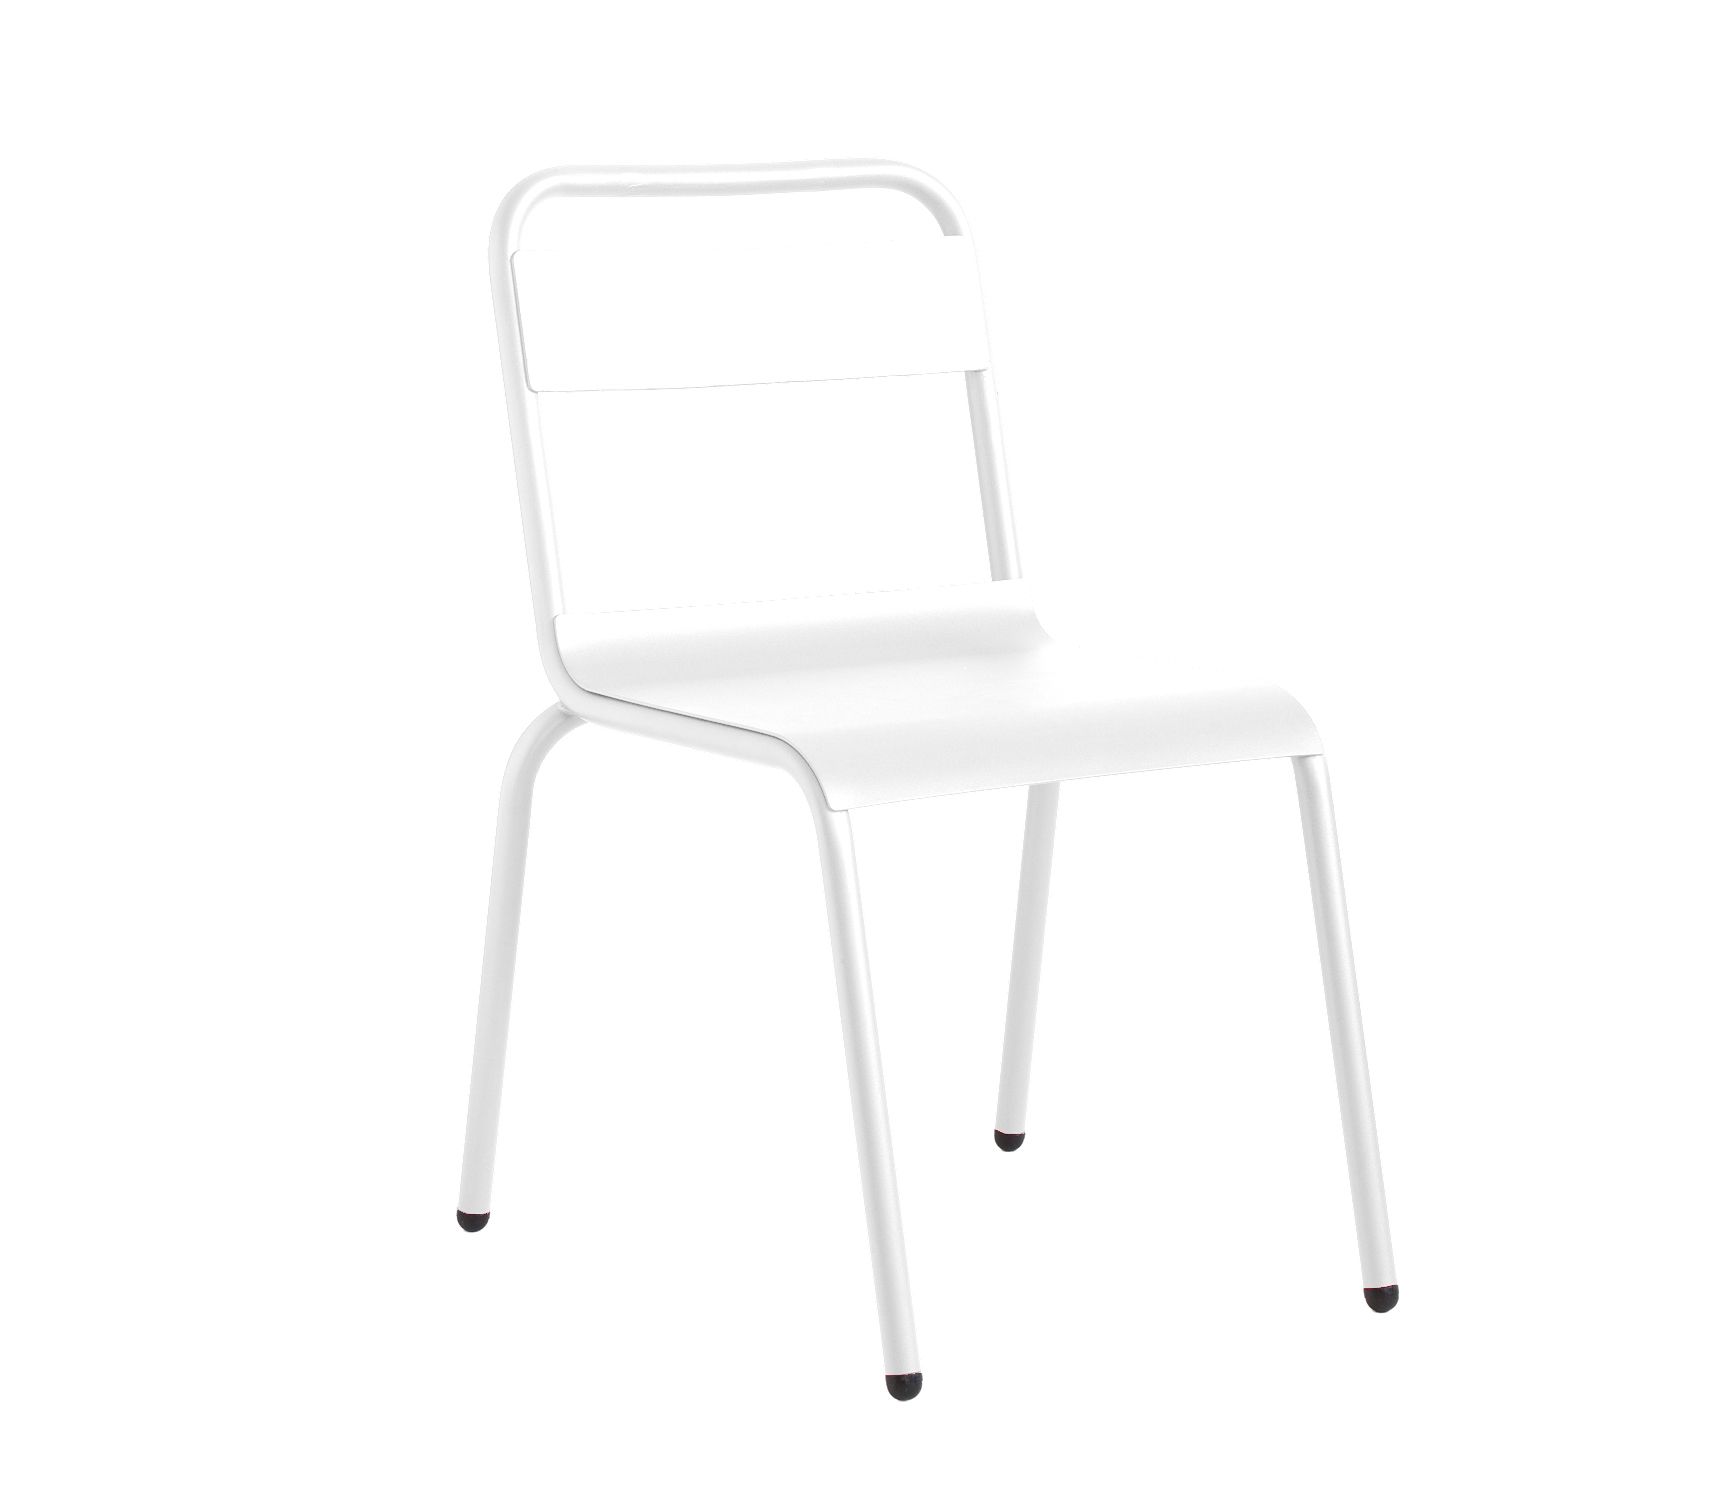 ISIMAR - Hliníková stolička BIARRITZ - biela